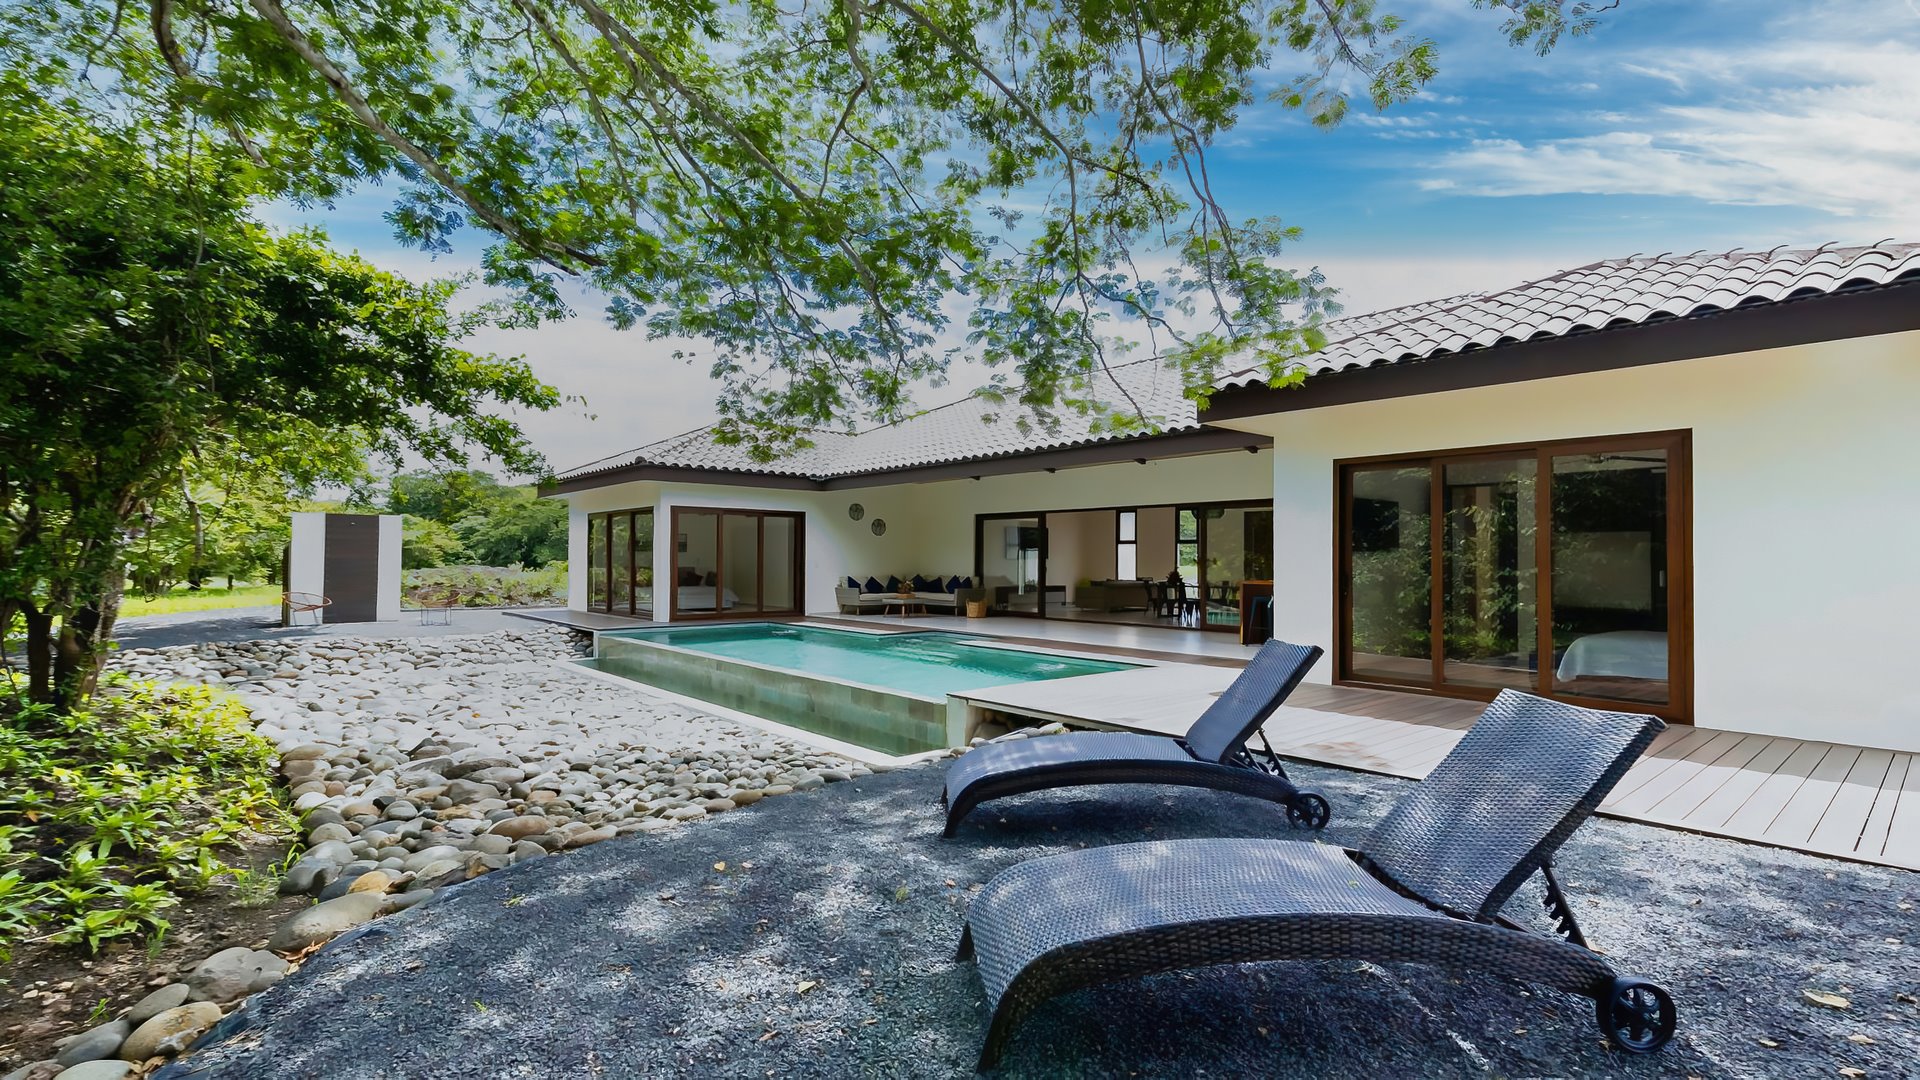 10248-La piscine et la terrasse ombragée de la maison à Hacienda Pinilla au Costa Rica